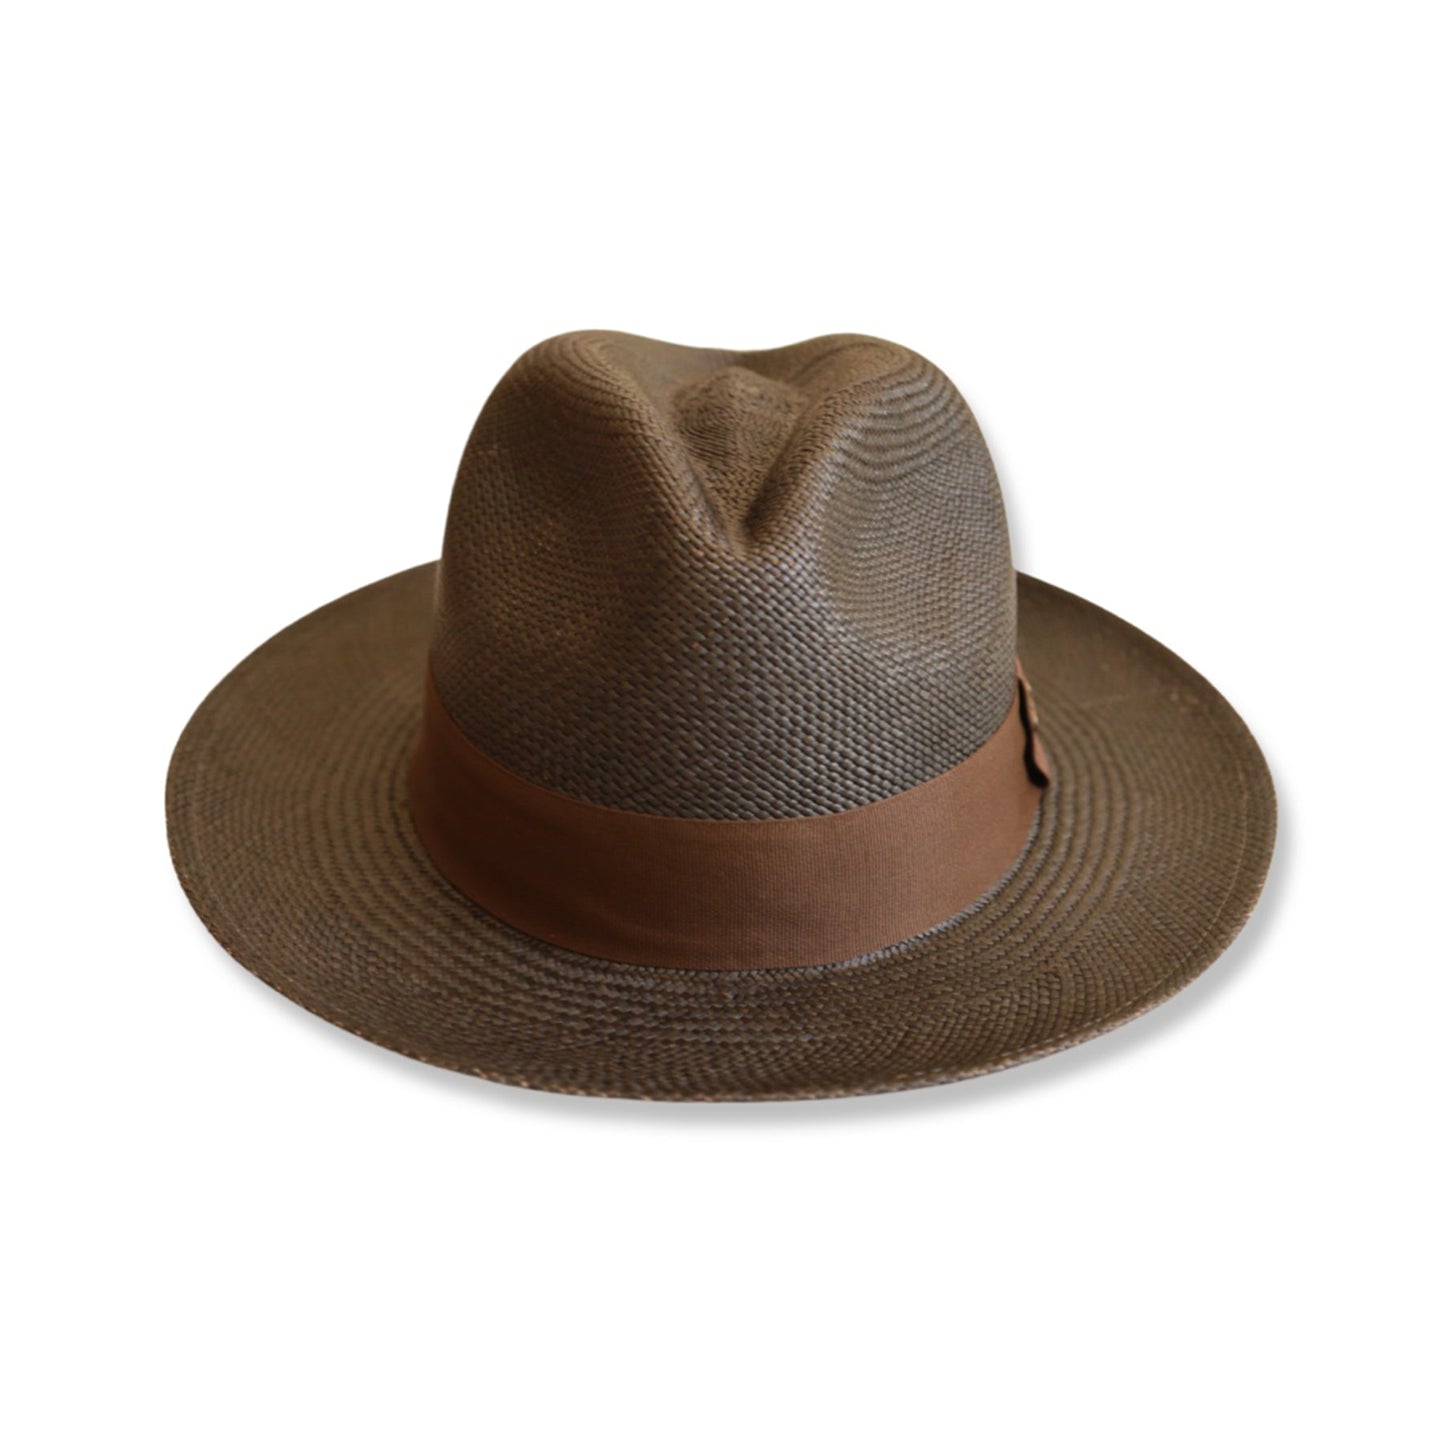 Panama Hat - Premium Accessories from Marina St Barth - Just $140! Shop now at Marina St Barth